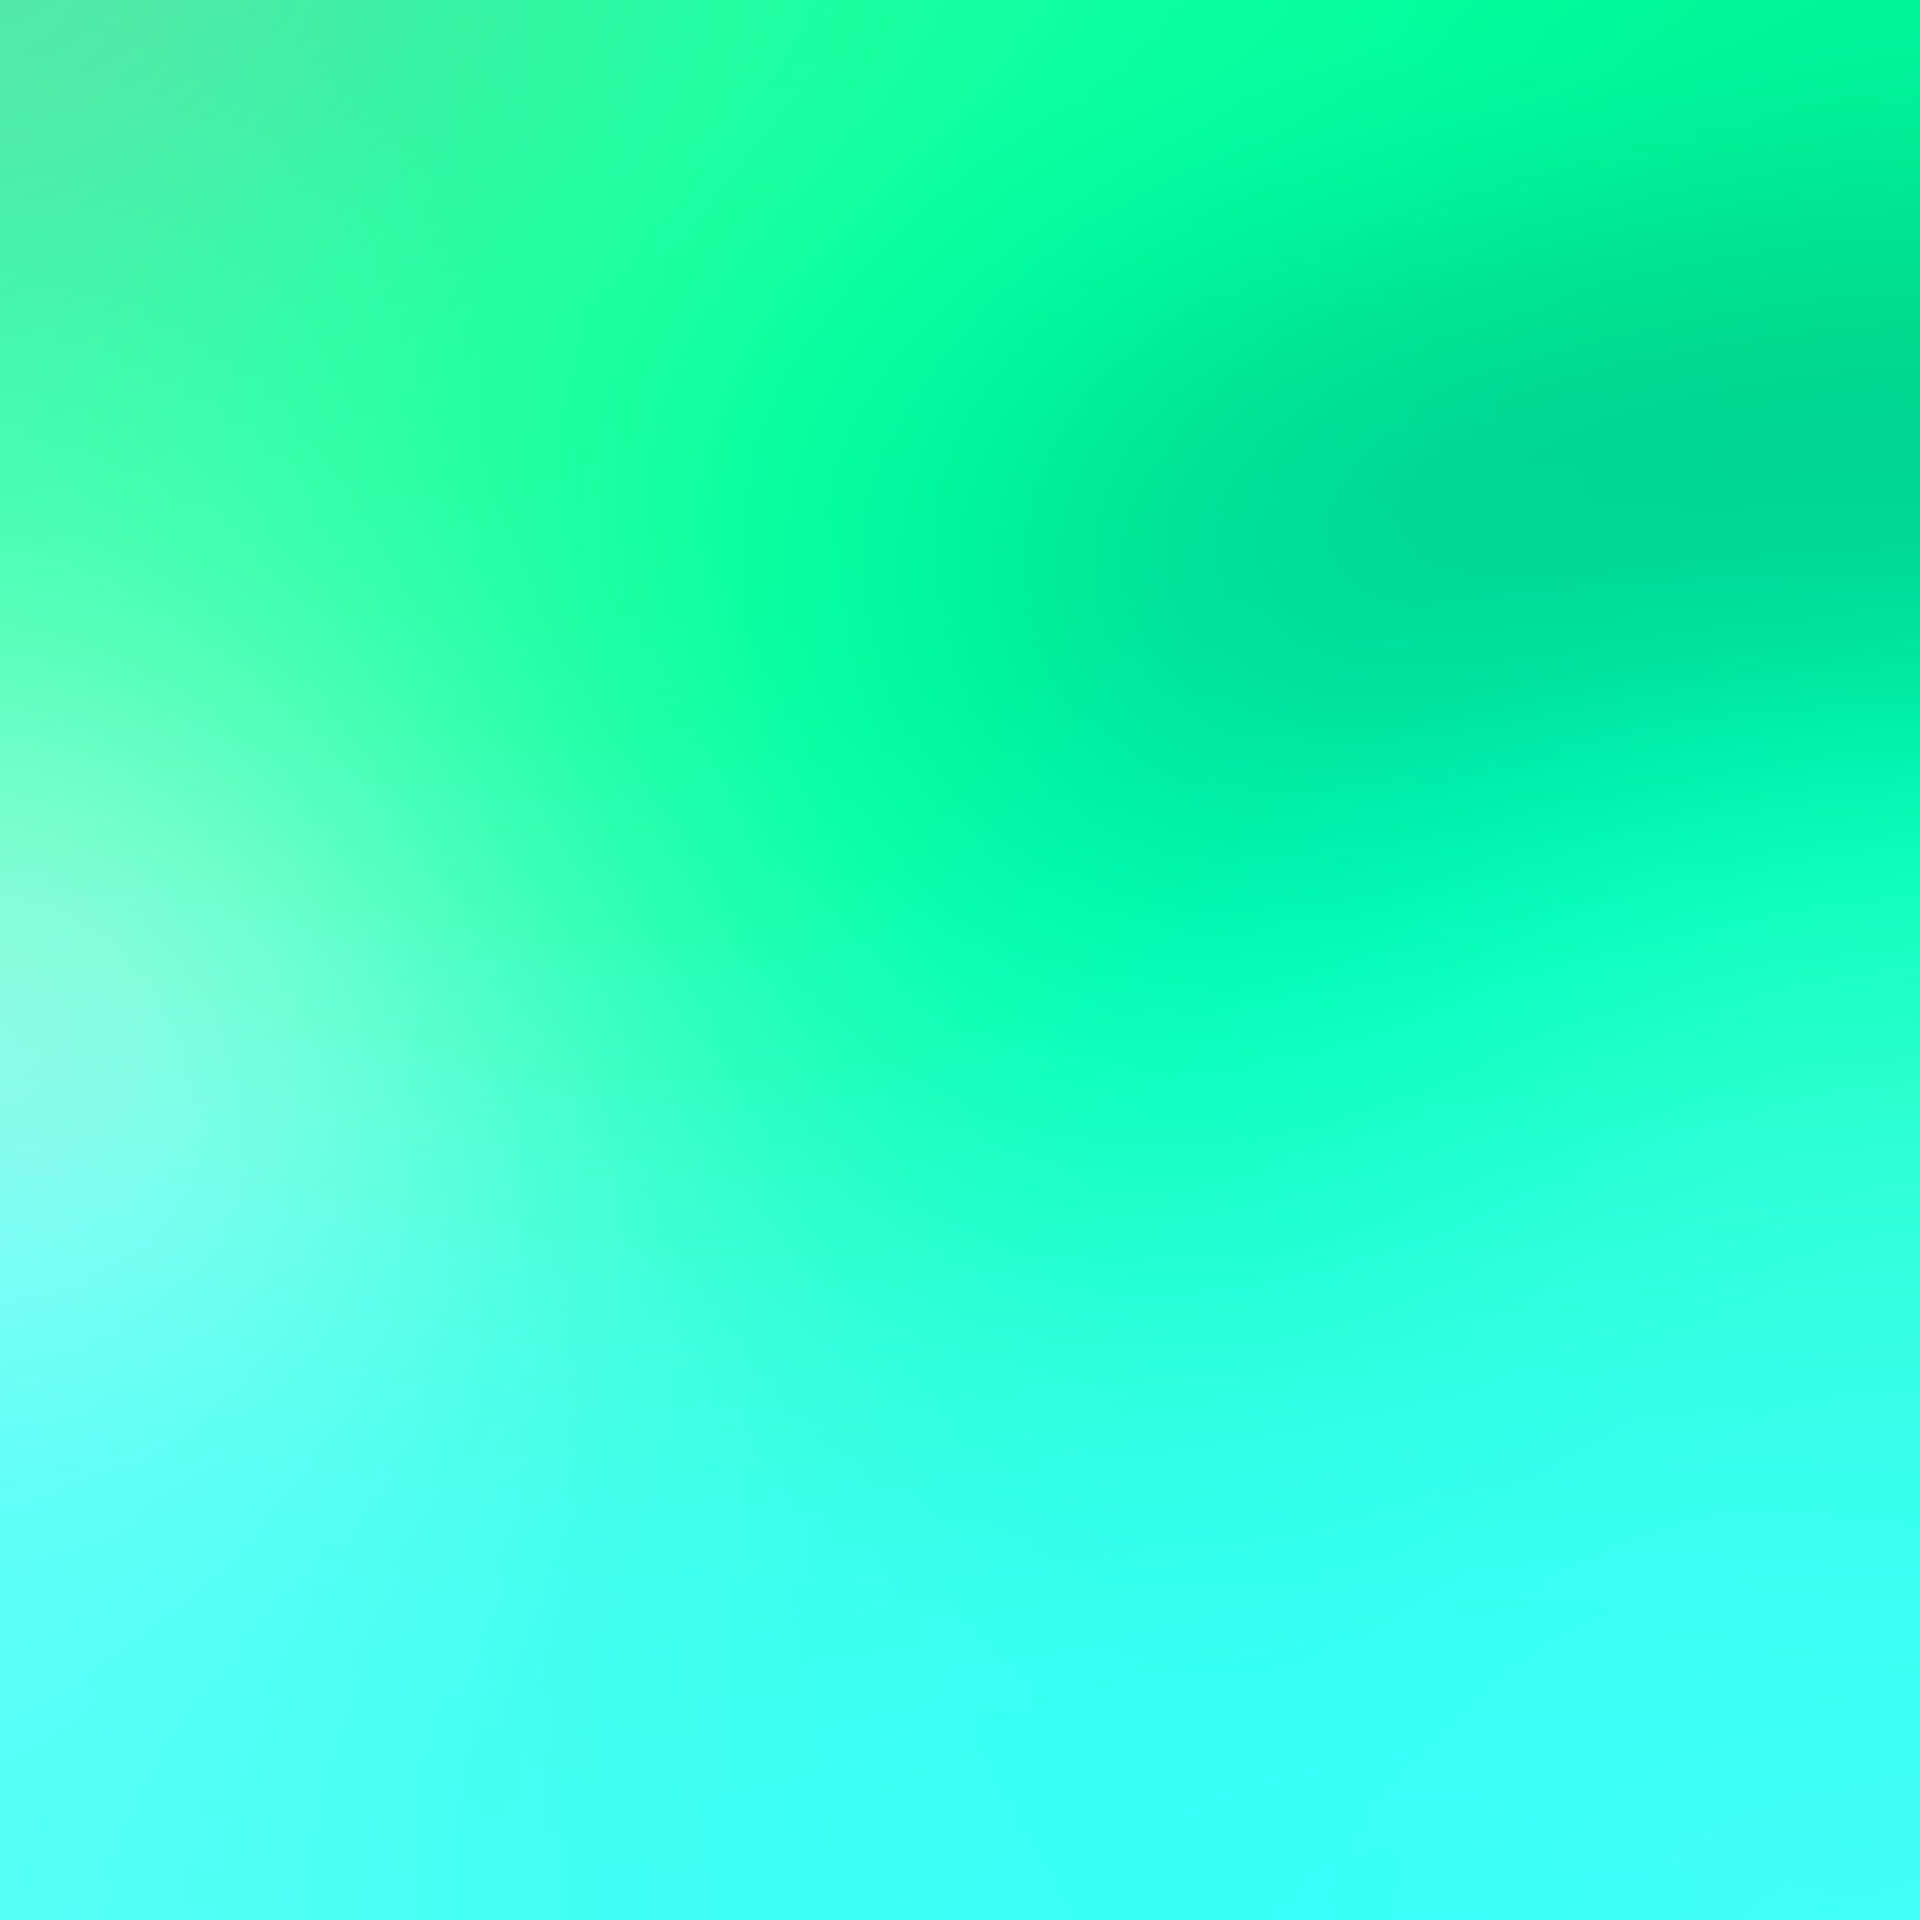 200+] Plain Green Backgrounds